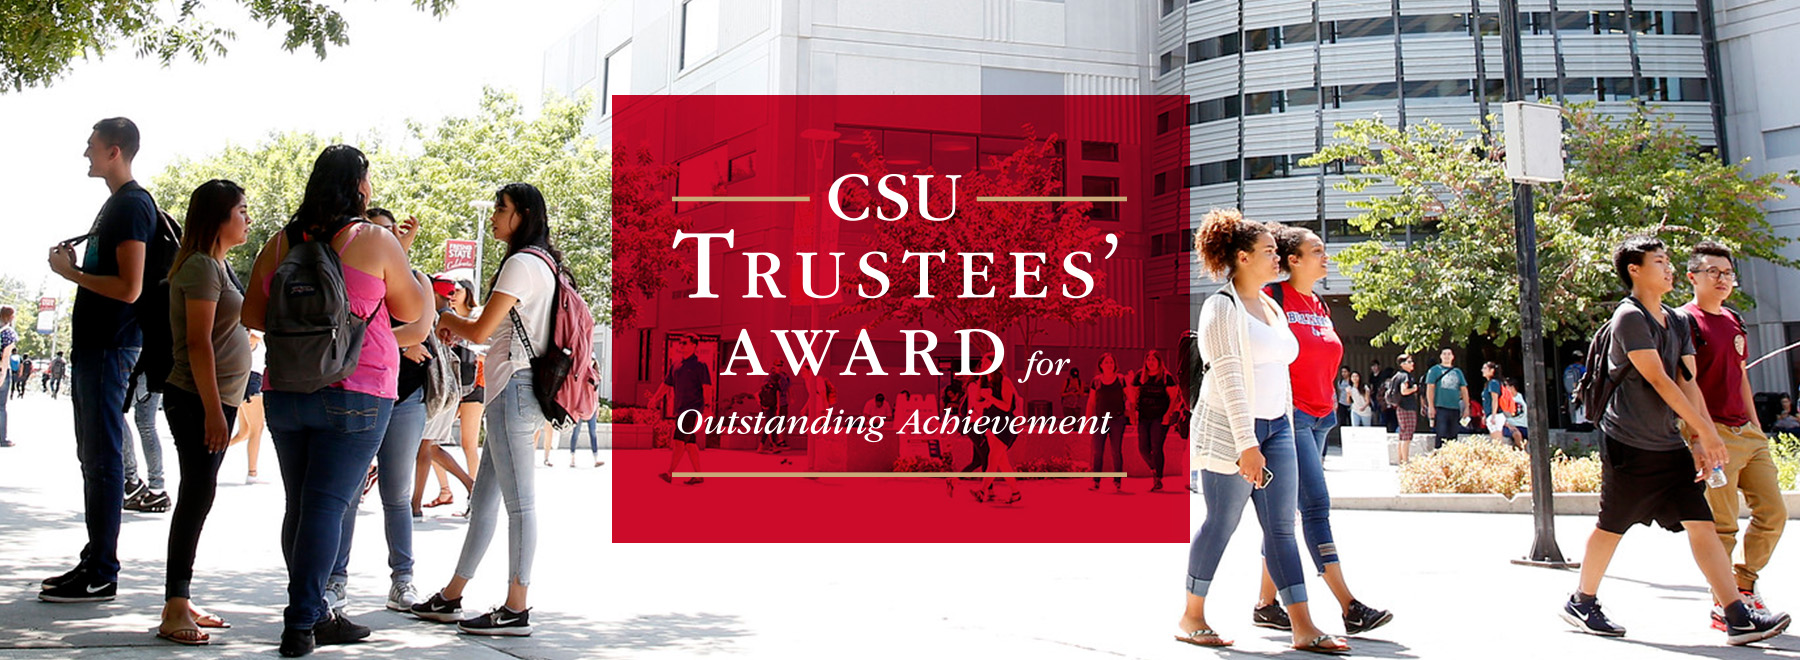 CSU Trustees' Award for Outstanding Achievement